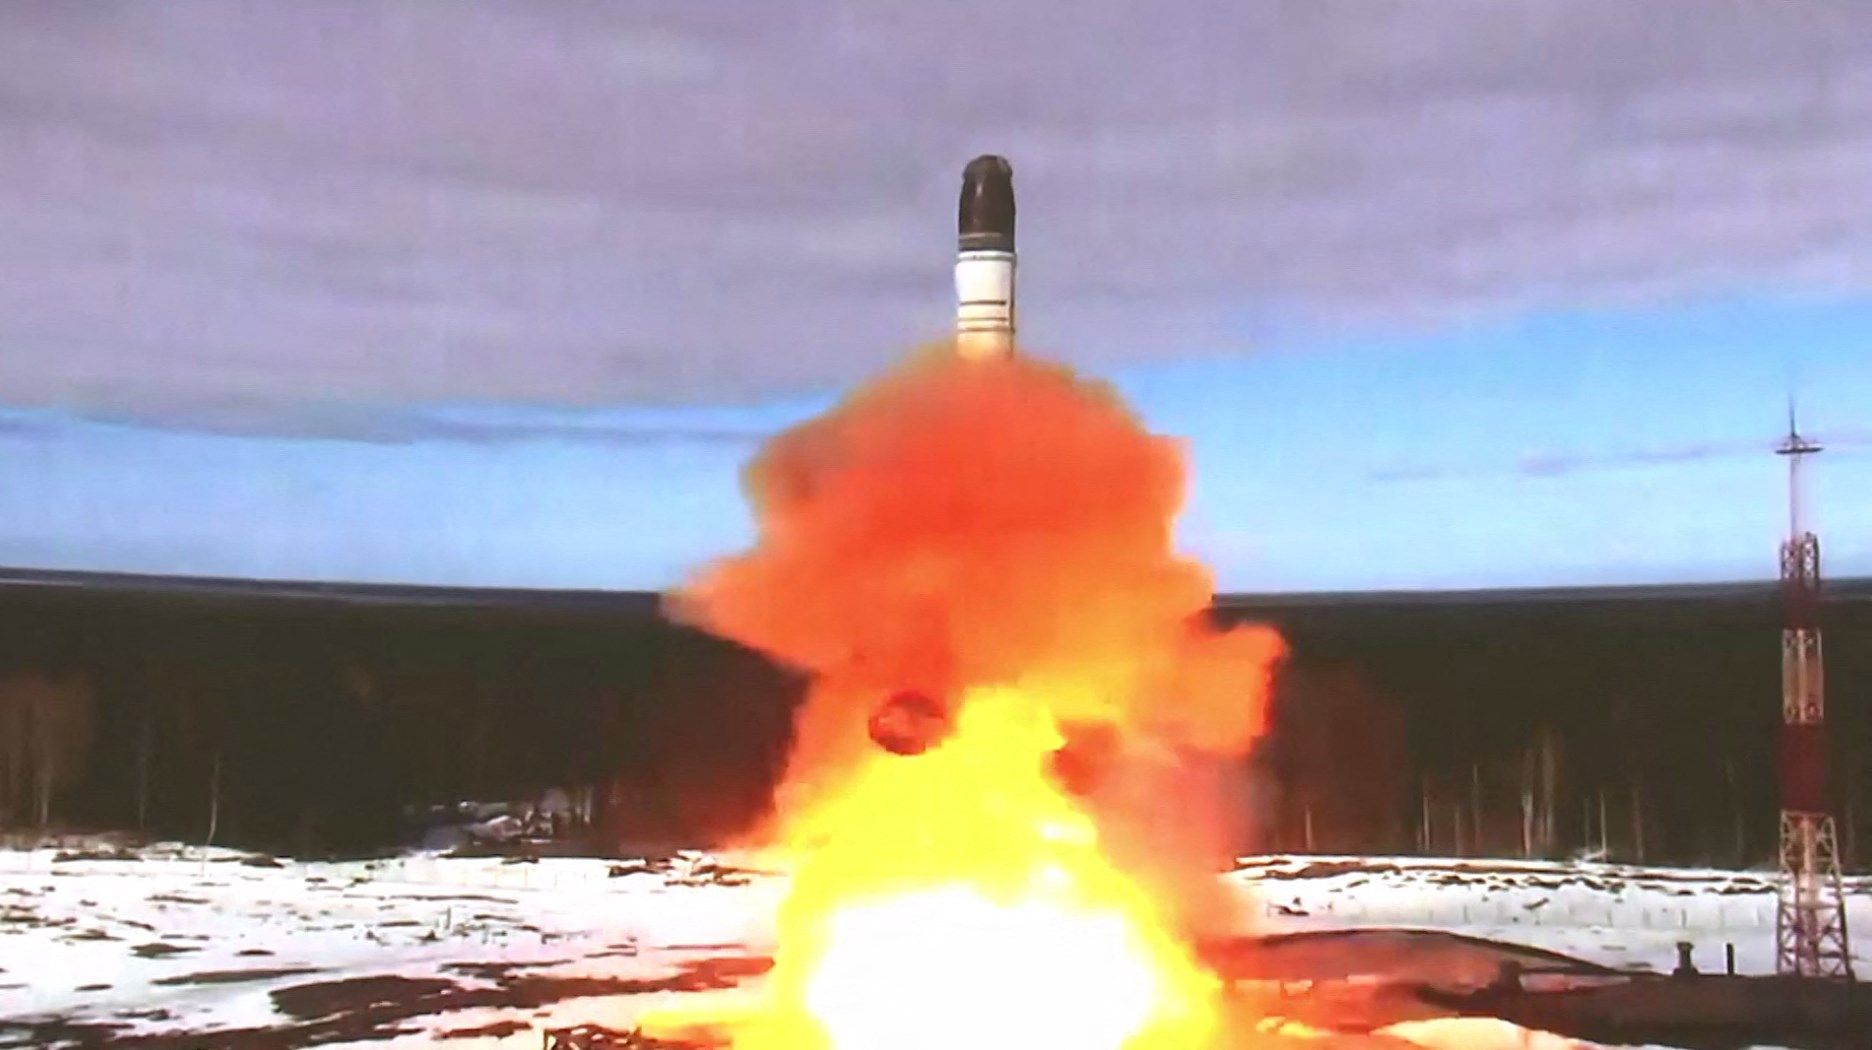 R-36M2 Voevoda SS-18 Mod5/Mod6 Intercontinental Ballistic Missile ICBM  Editorial Image - Image of explorer, exploration: 158478755